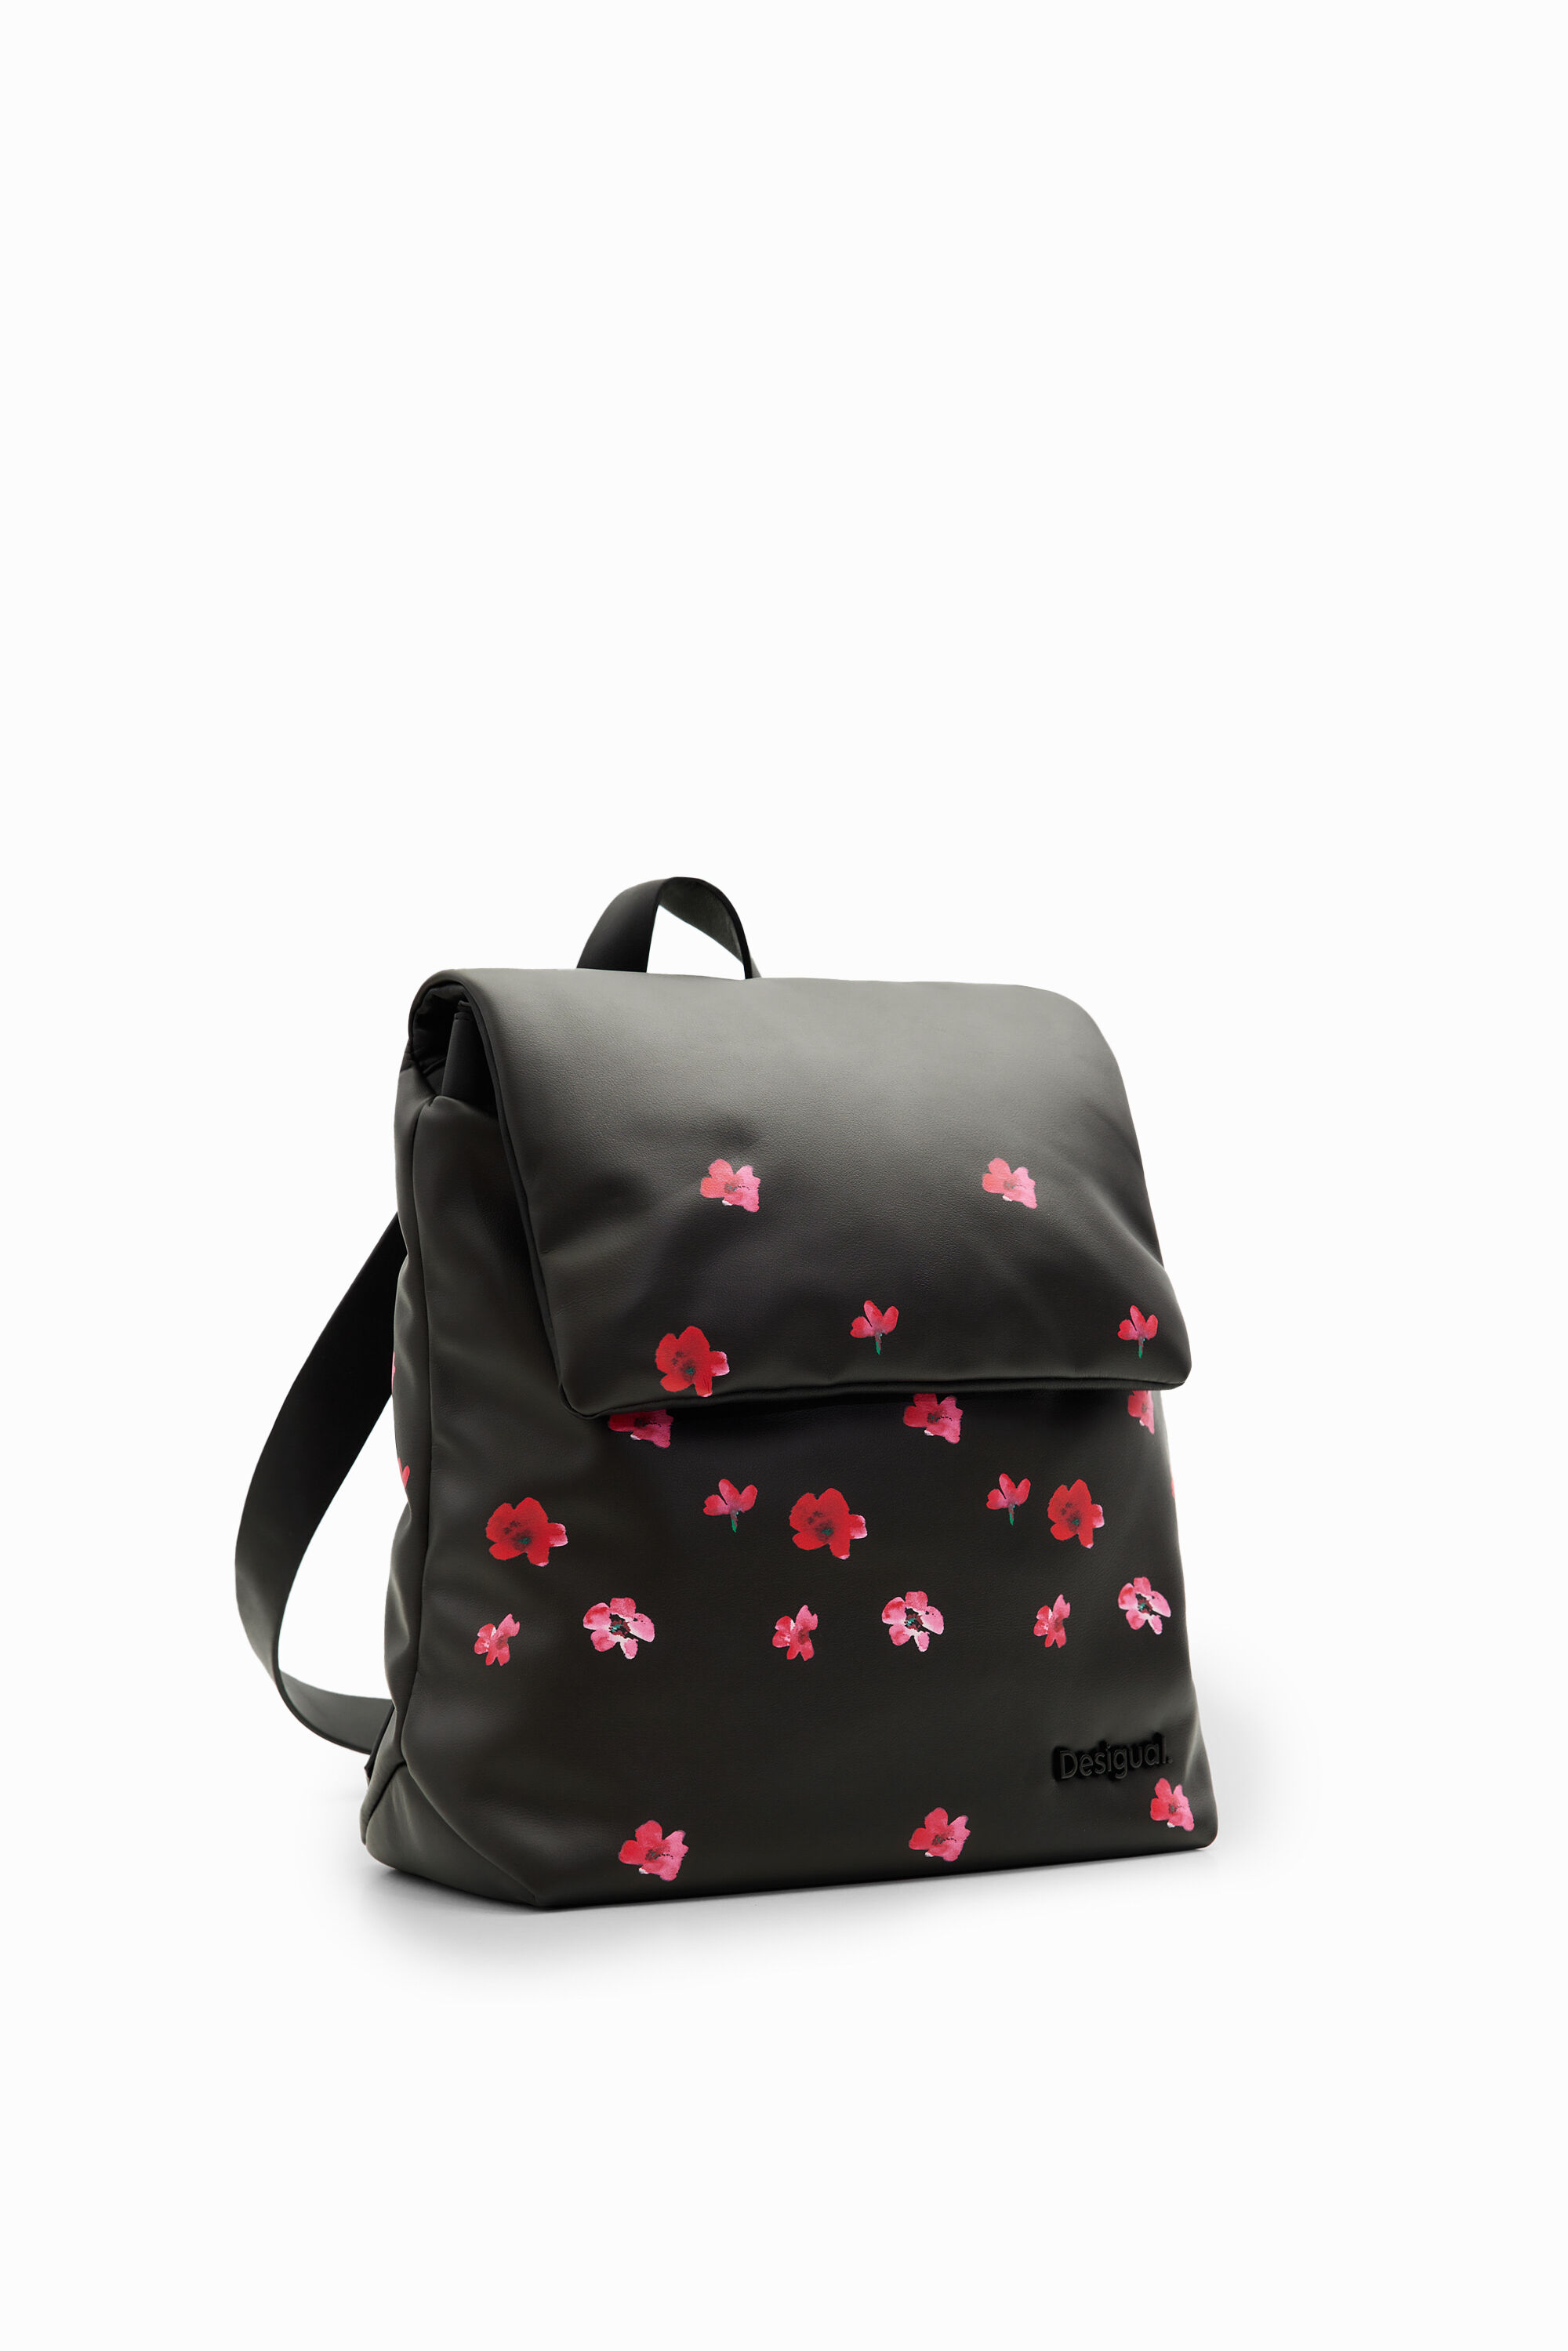 Desigual S padded floral backpack